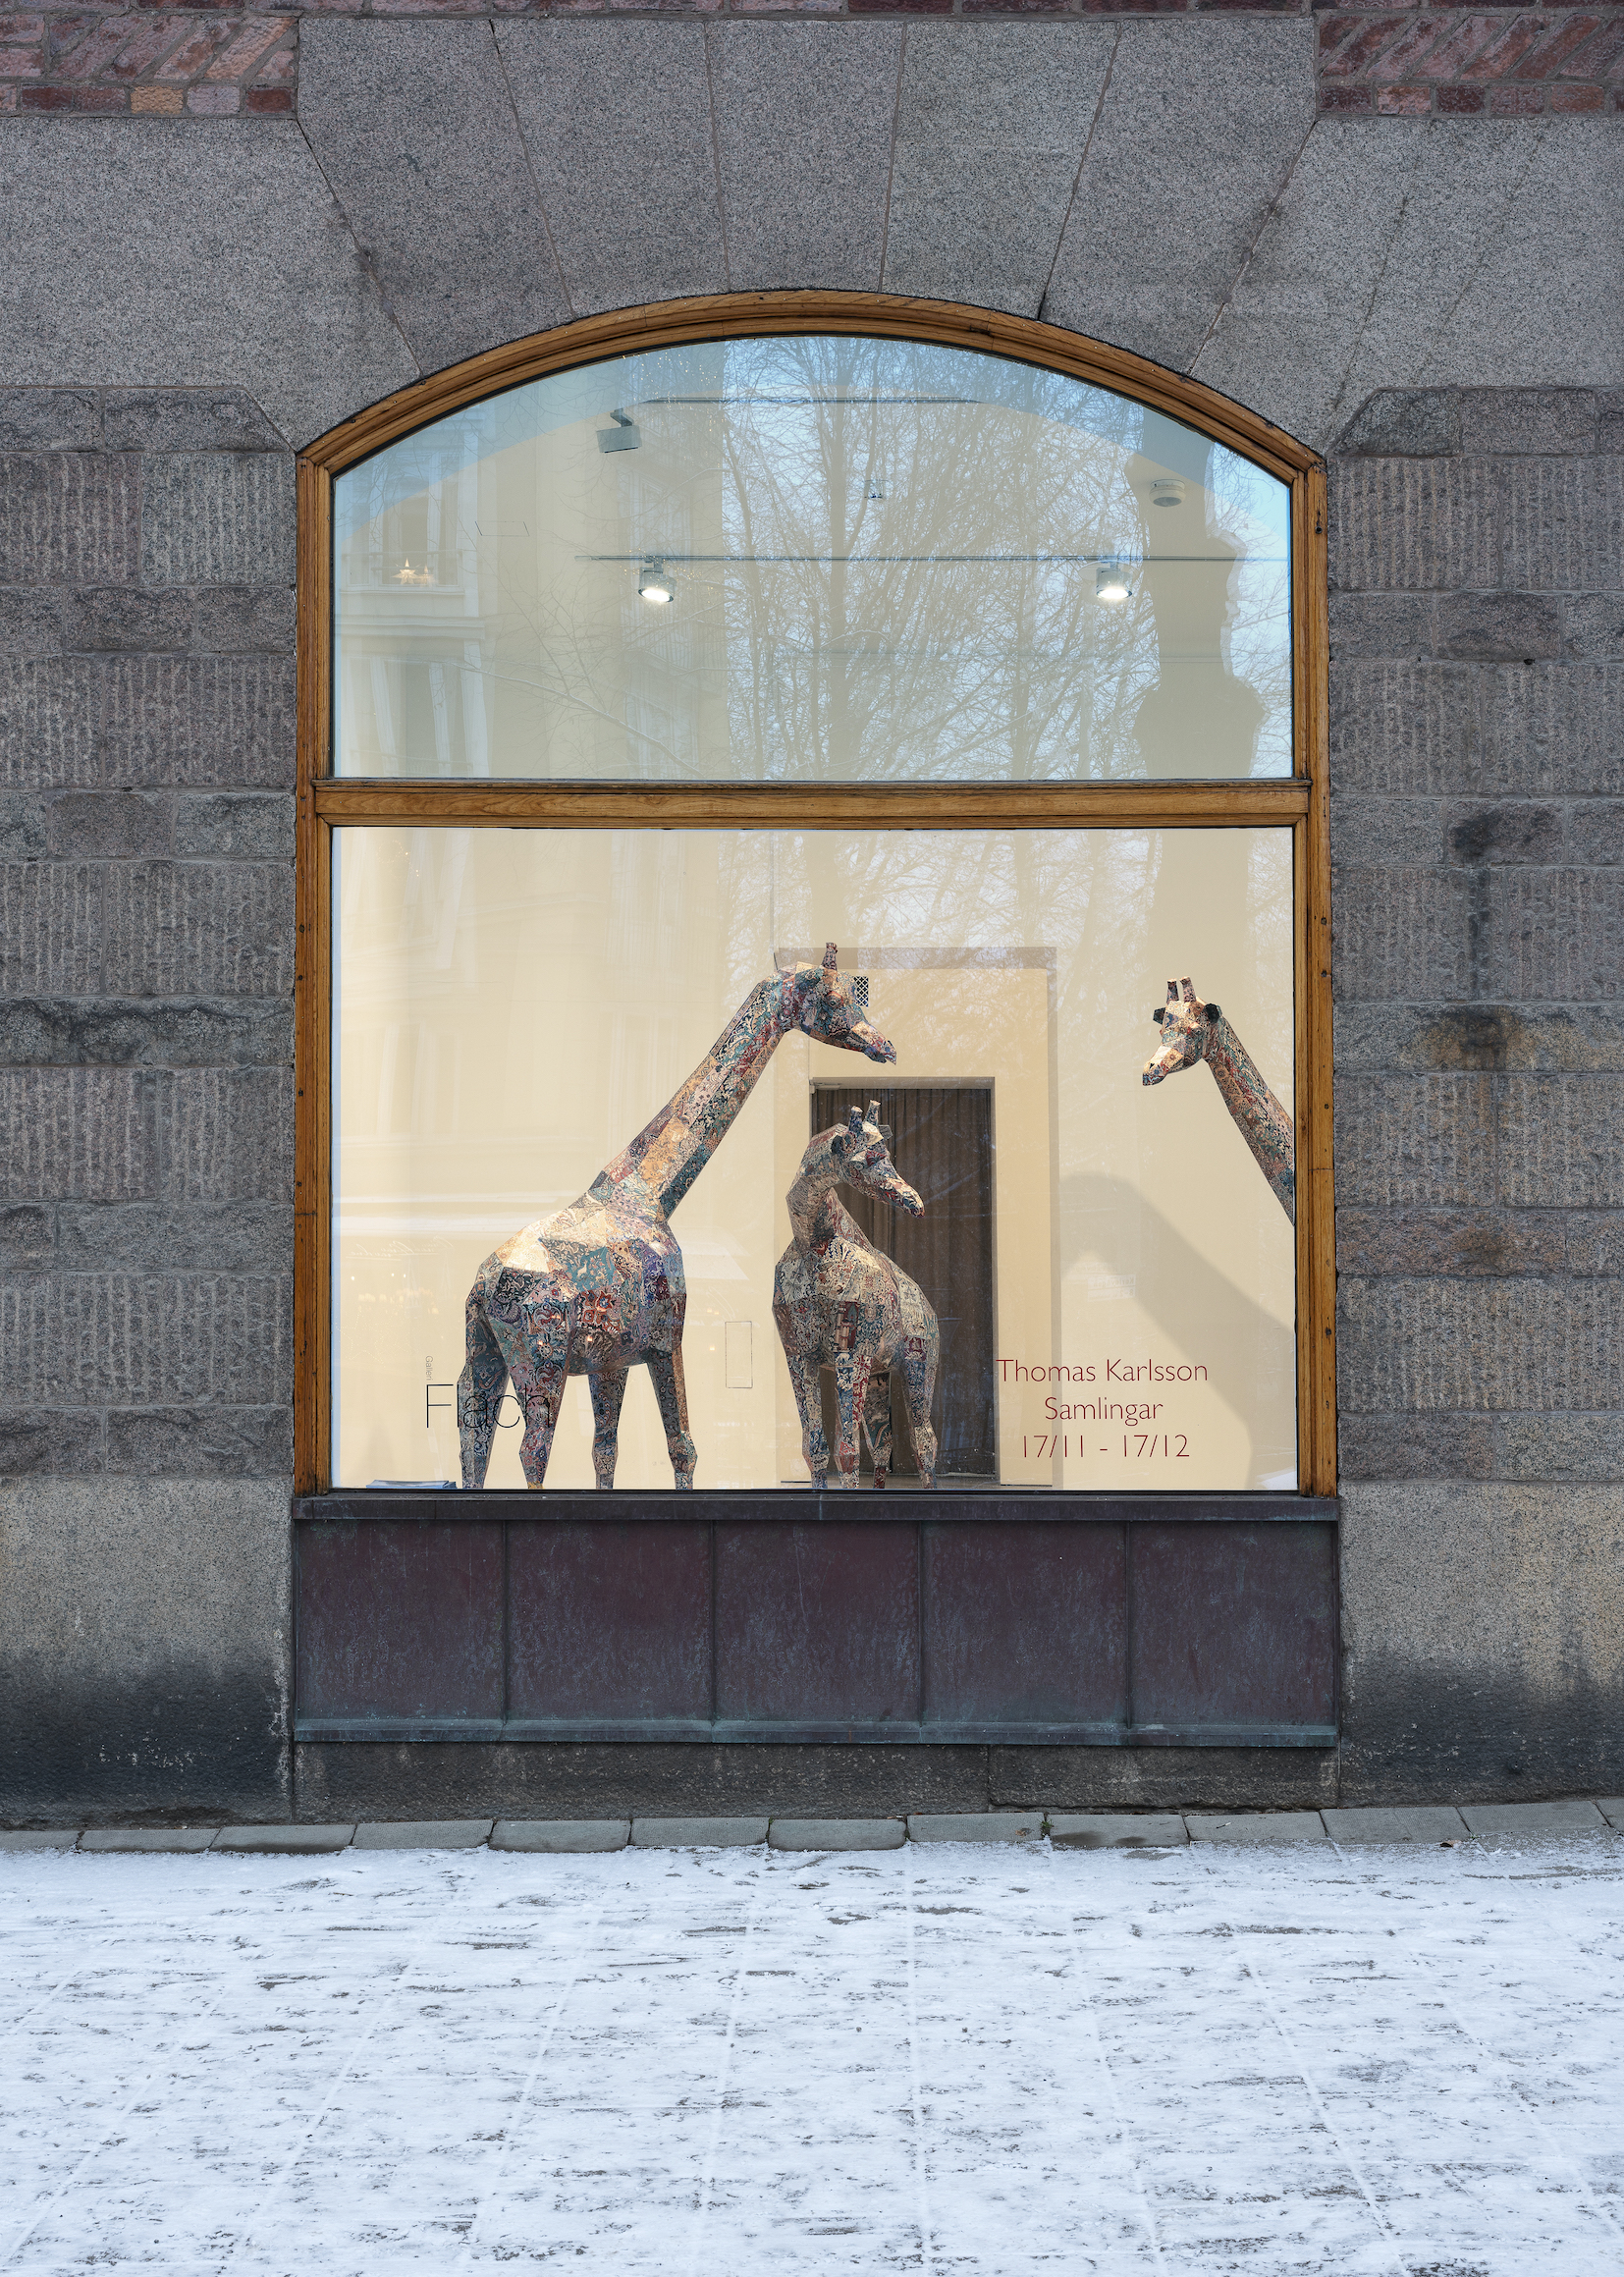 Thomas Karlsson, "Samlingar" (Collections), 2022, Galleri Flach. Photo: Viktor Fordell